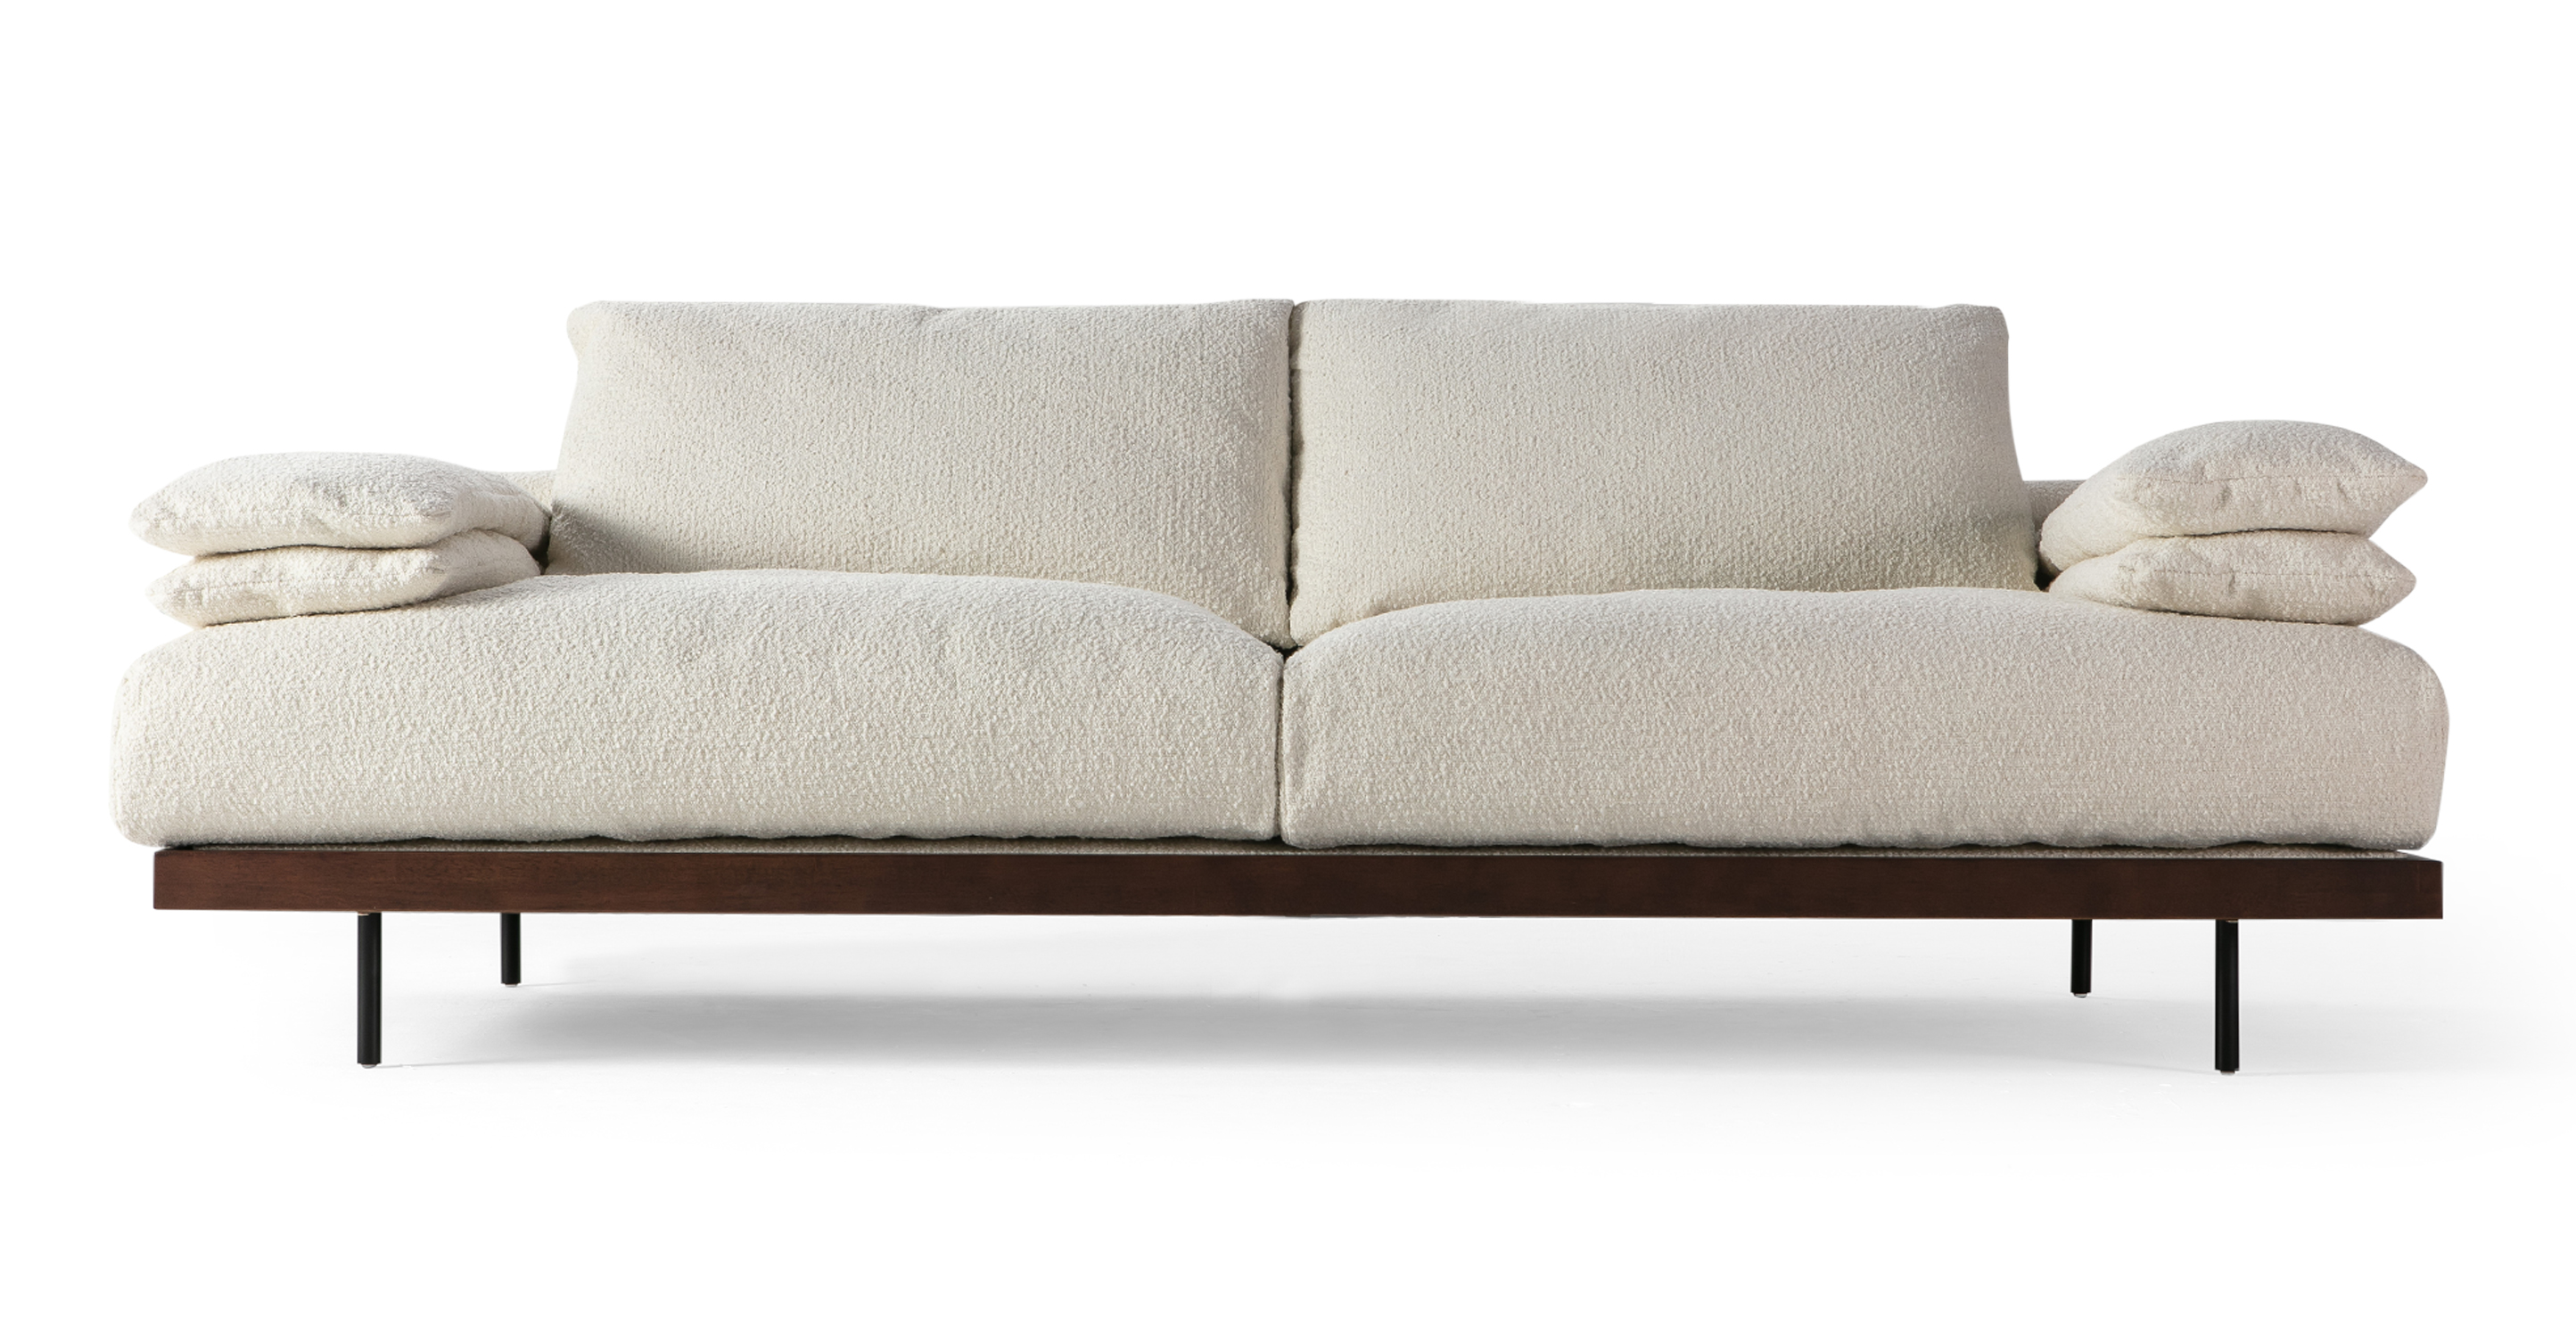 Kardiel Malibu 91 Fabric Sofa Sleeper, Cream White Boucle